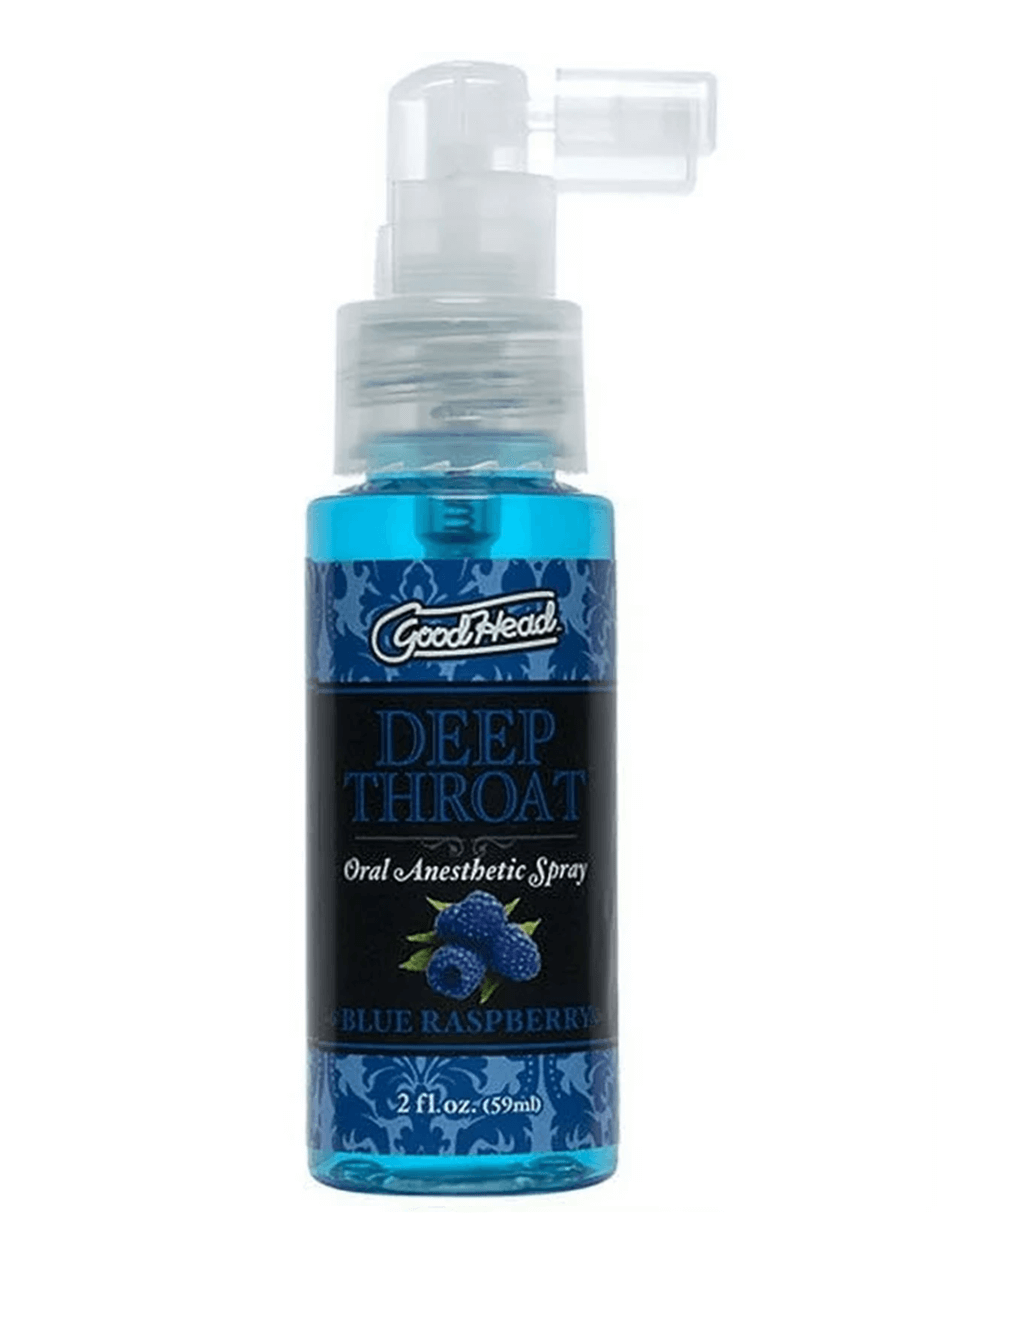 Goodhead Deep Throat Desensitizing Spray 2 oz Blue Rasperberry